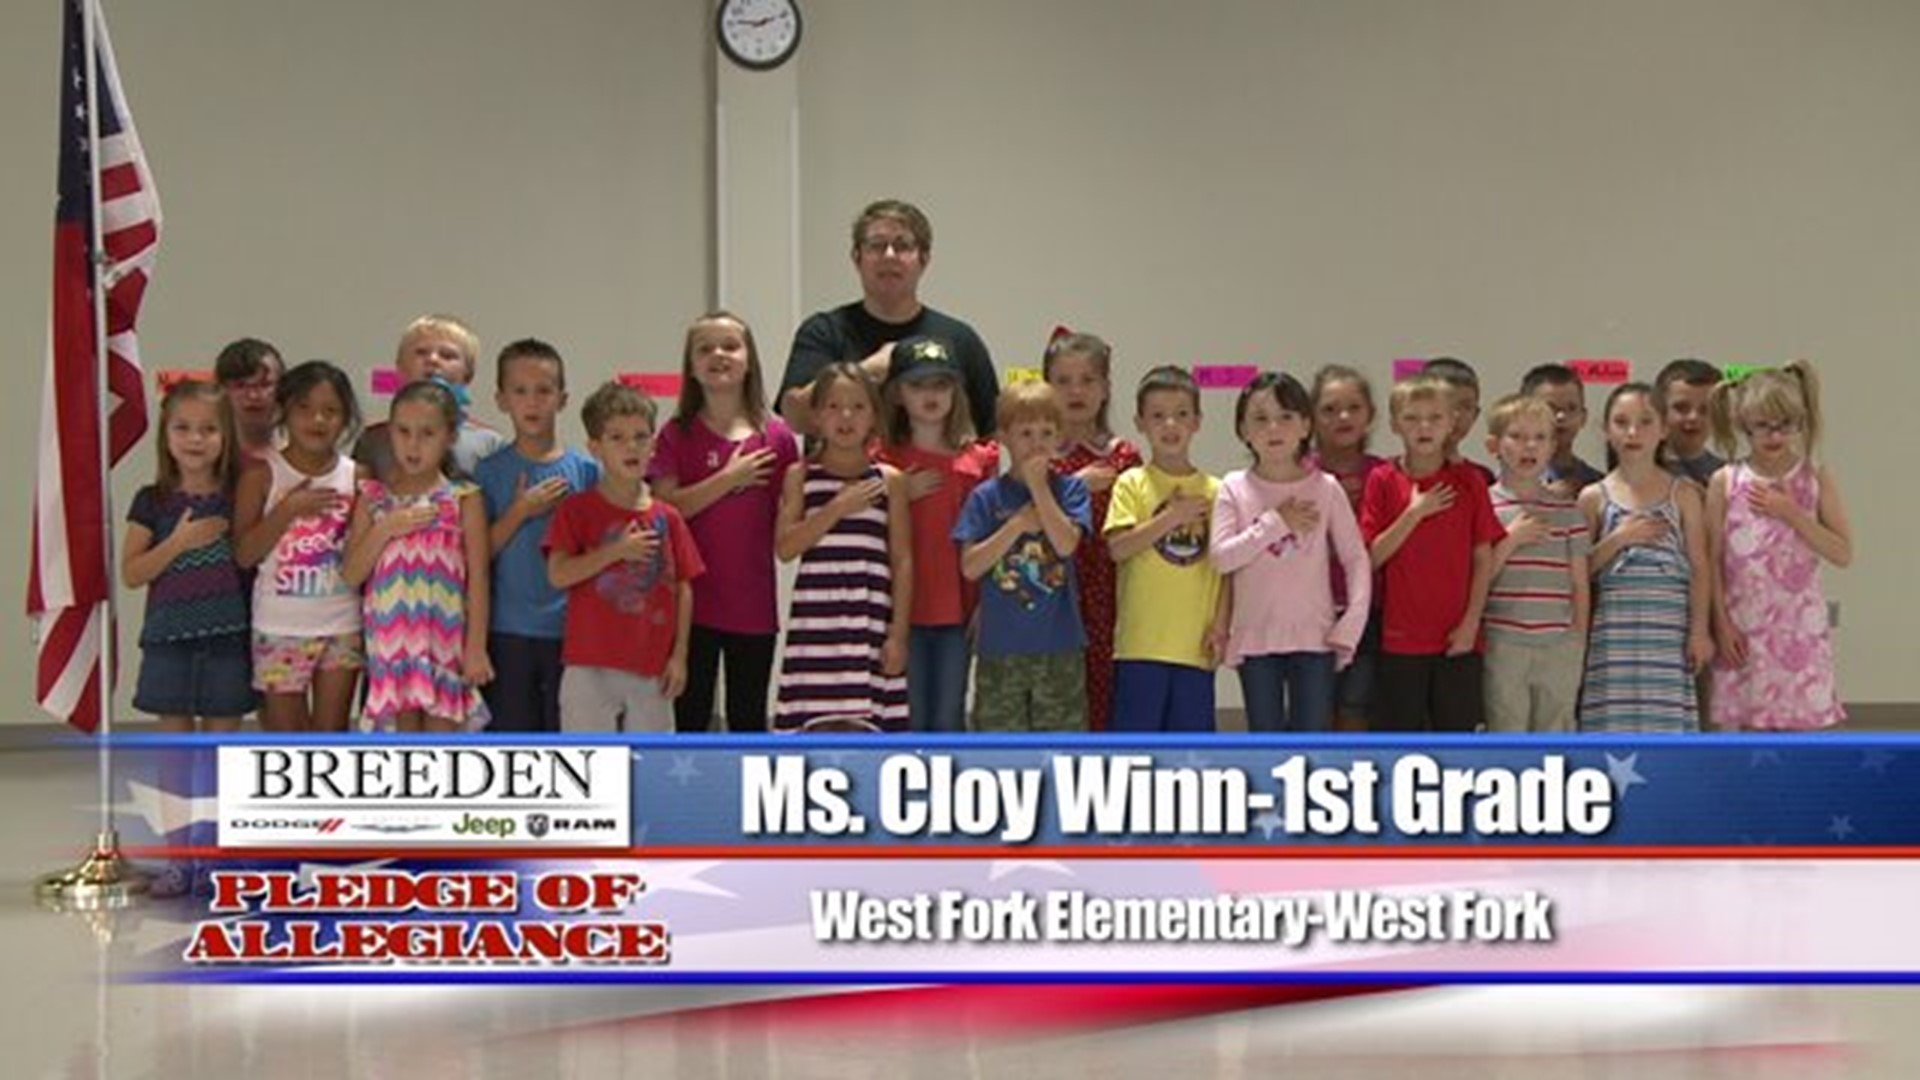 West Fork Elementary - West Fork - Ms. Cloy Winn - 1st Grade